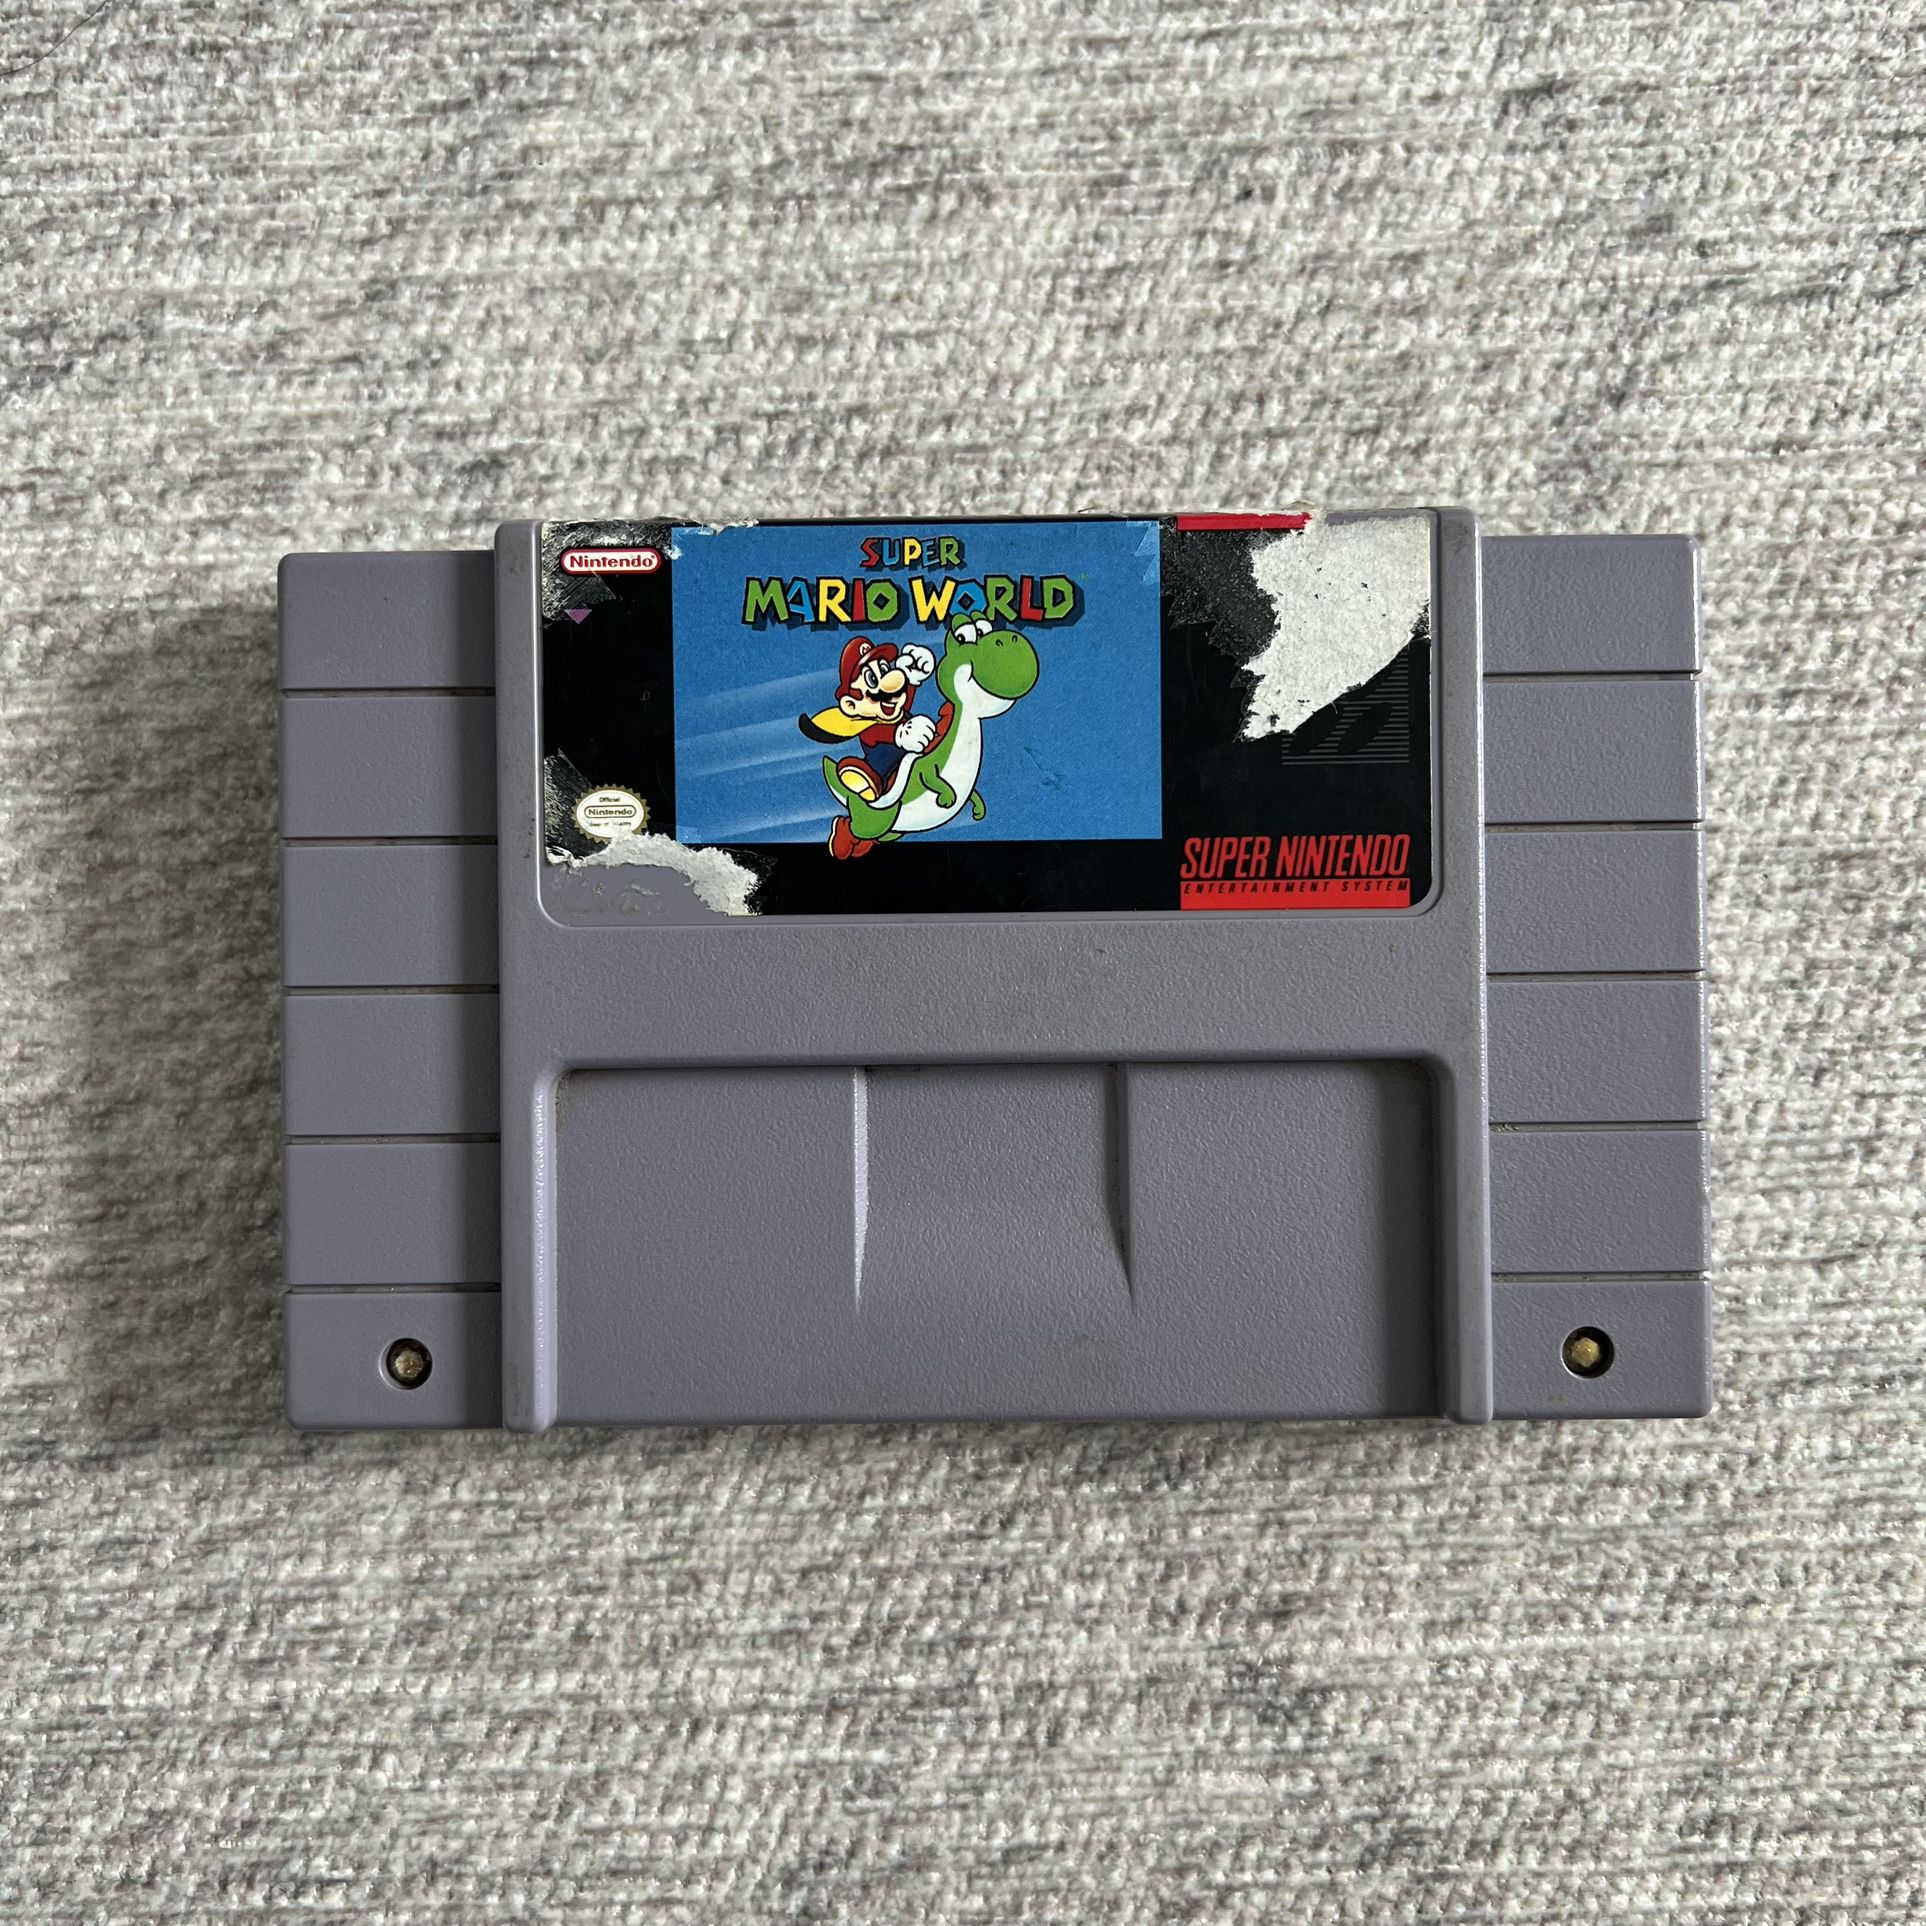 Super Nintendo SNES Super Mario World Video Game Cart Cartridge ONLY